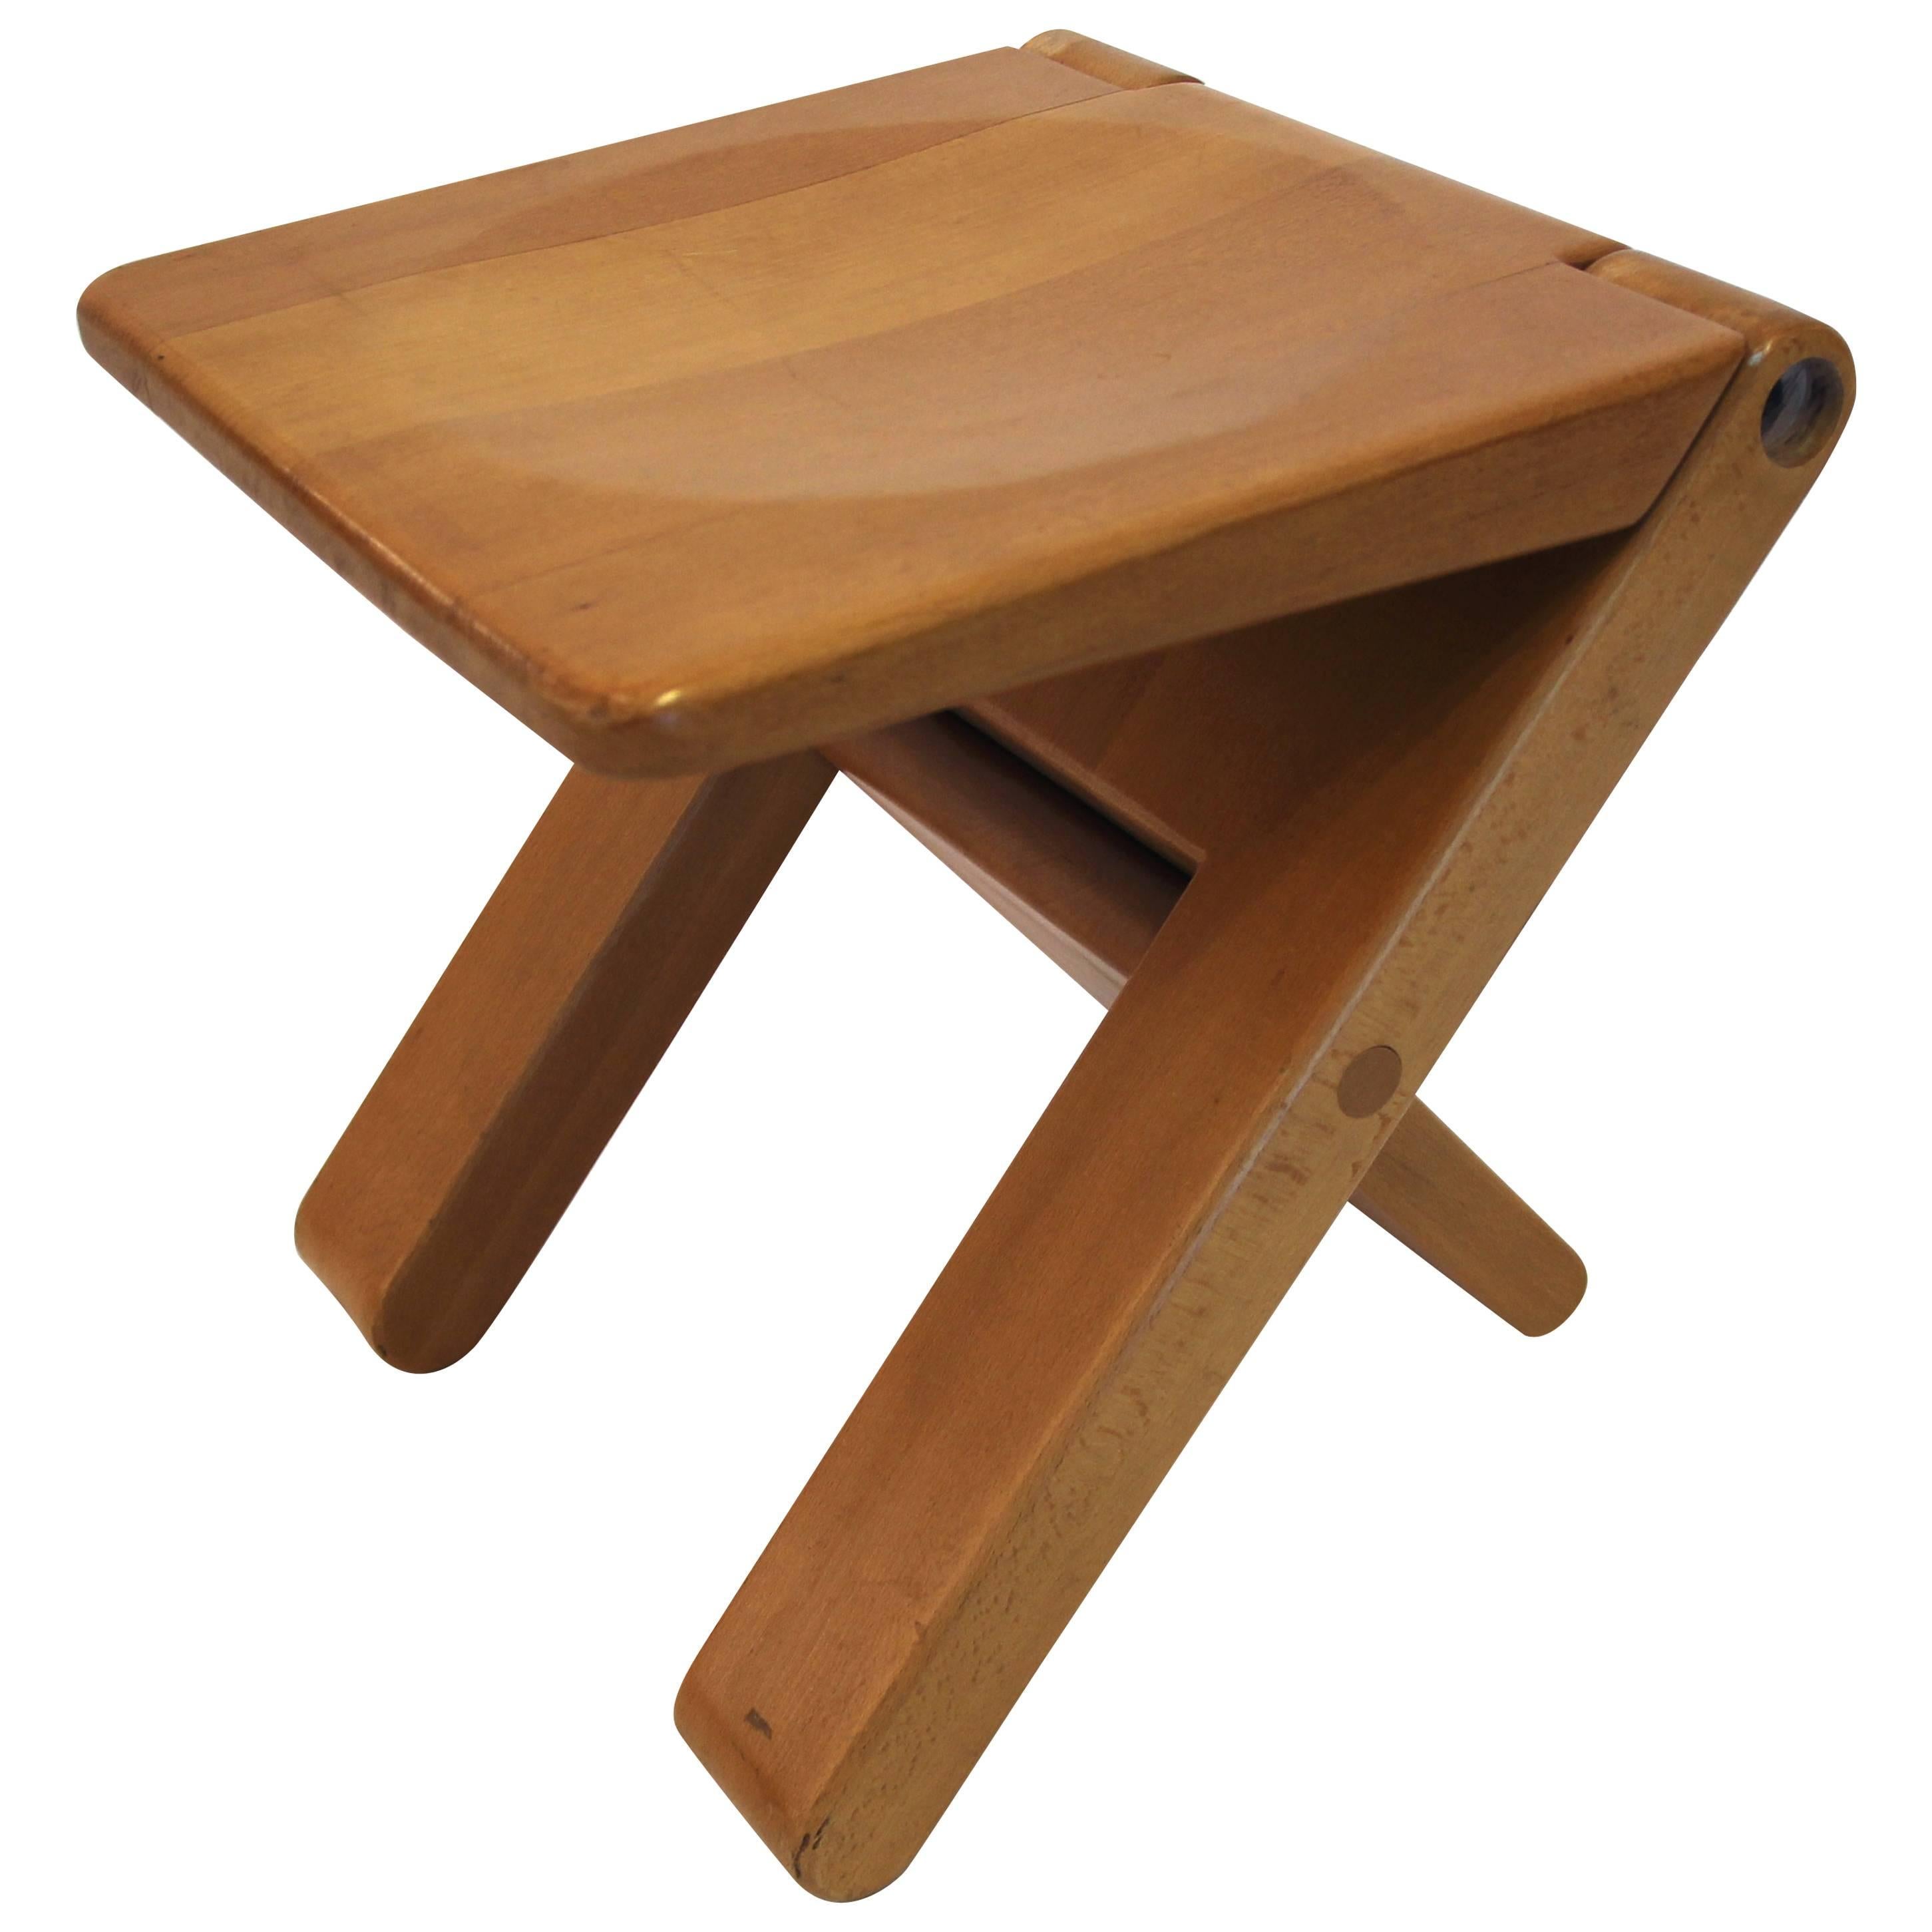 Marcel Ramond (1935) stool, beech, Form Design edition, Circa 1979 France.